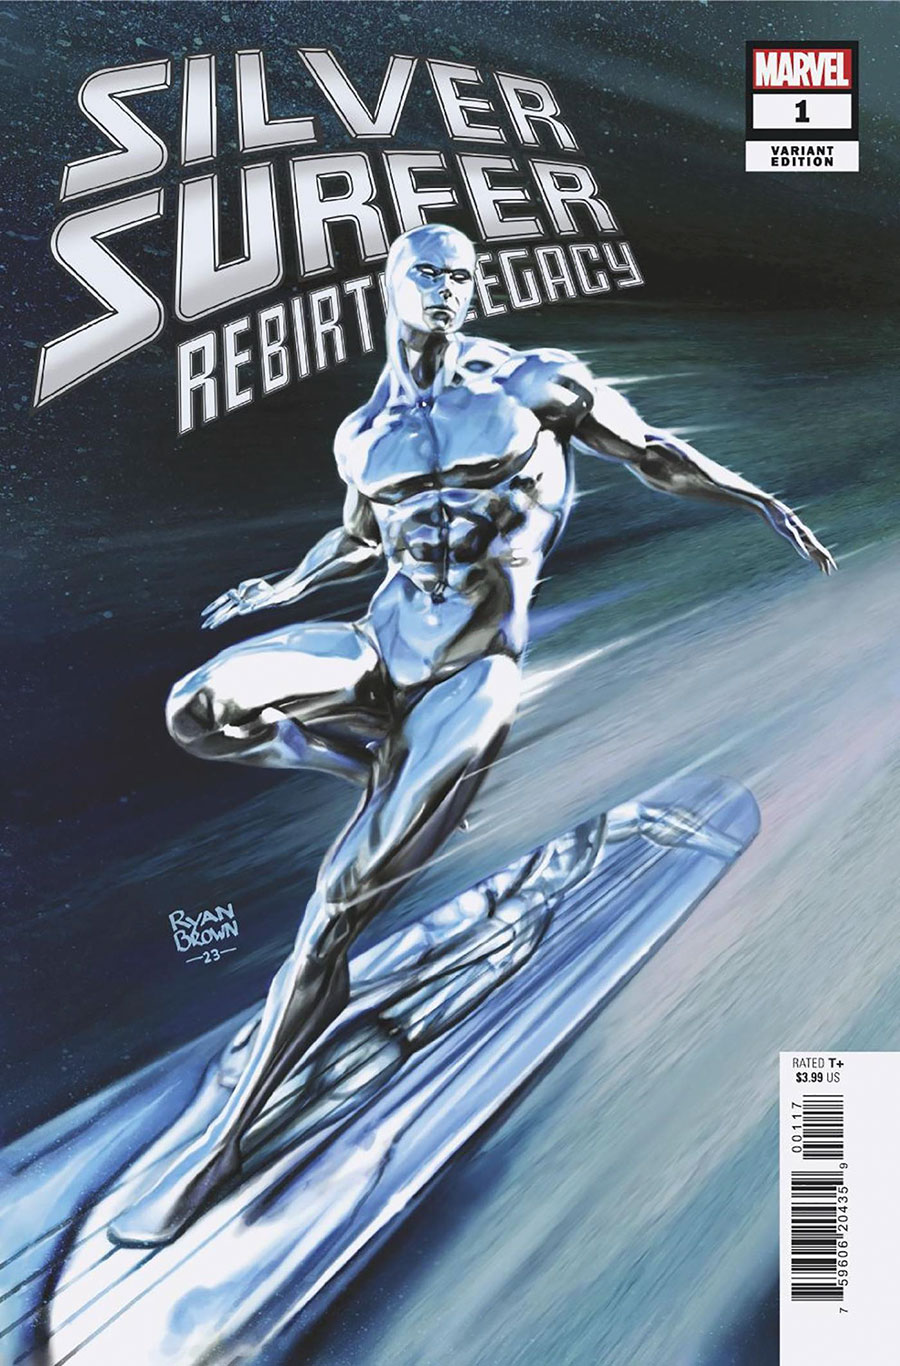 Silver Surfer Rebirth Legacy #1 Cover E Incentive Ryan Brown Variant Cover